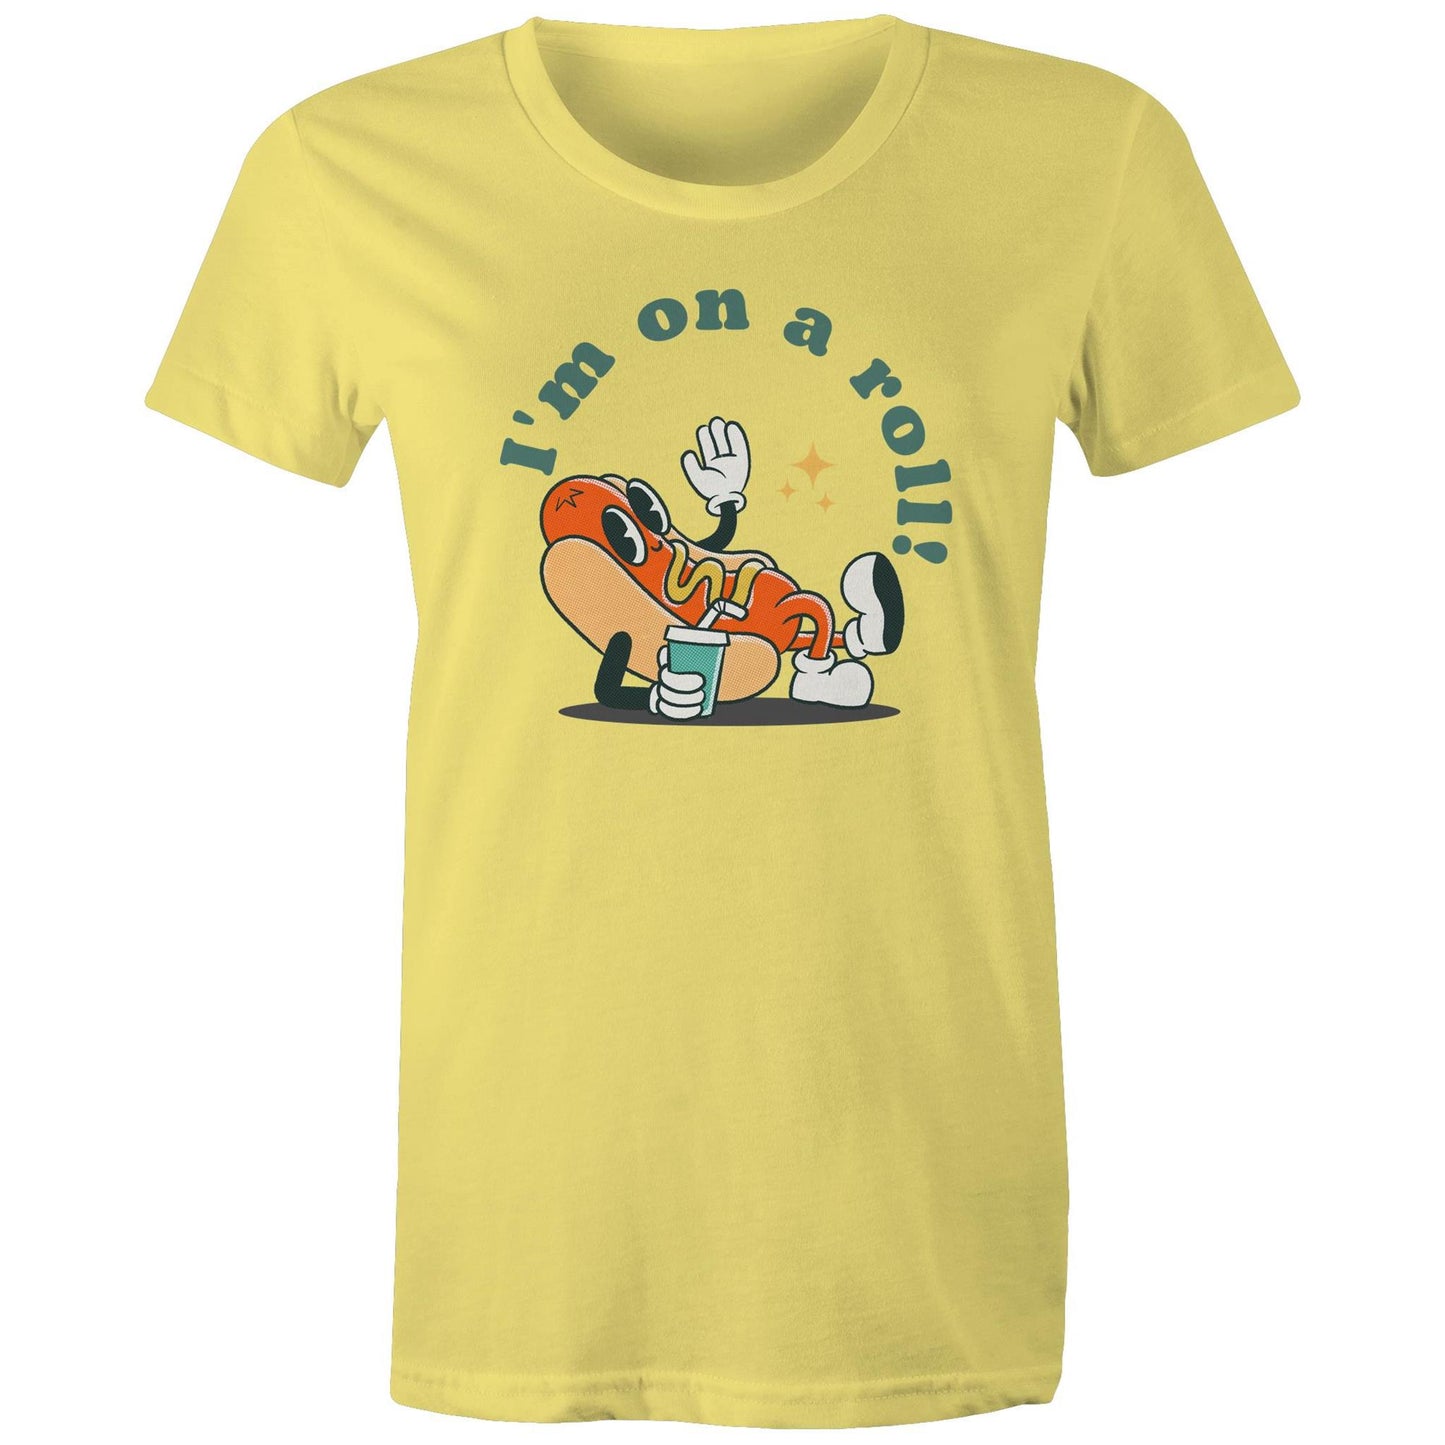 Hot Dog, I'm On A Roll - Womens T-shirt Yellow Womens T-shirt Food